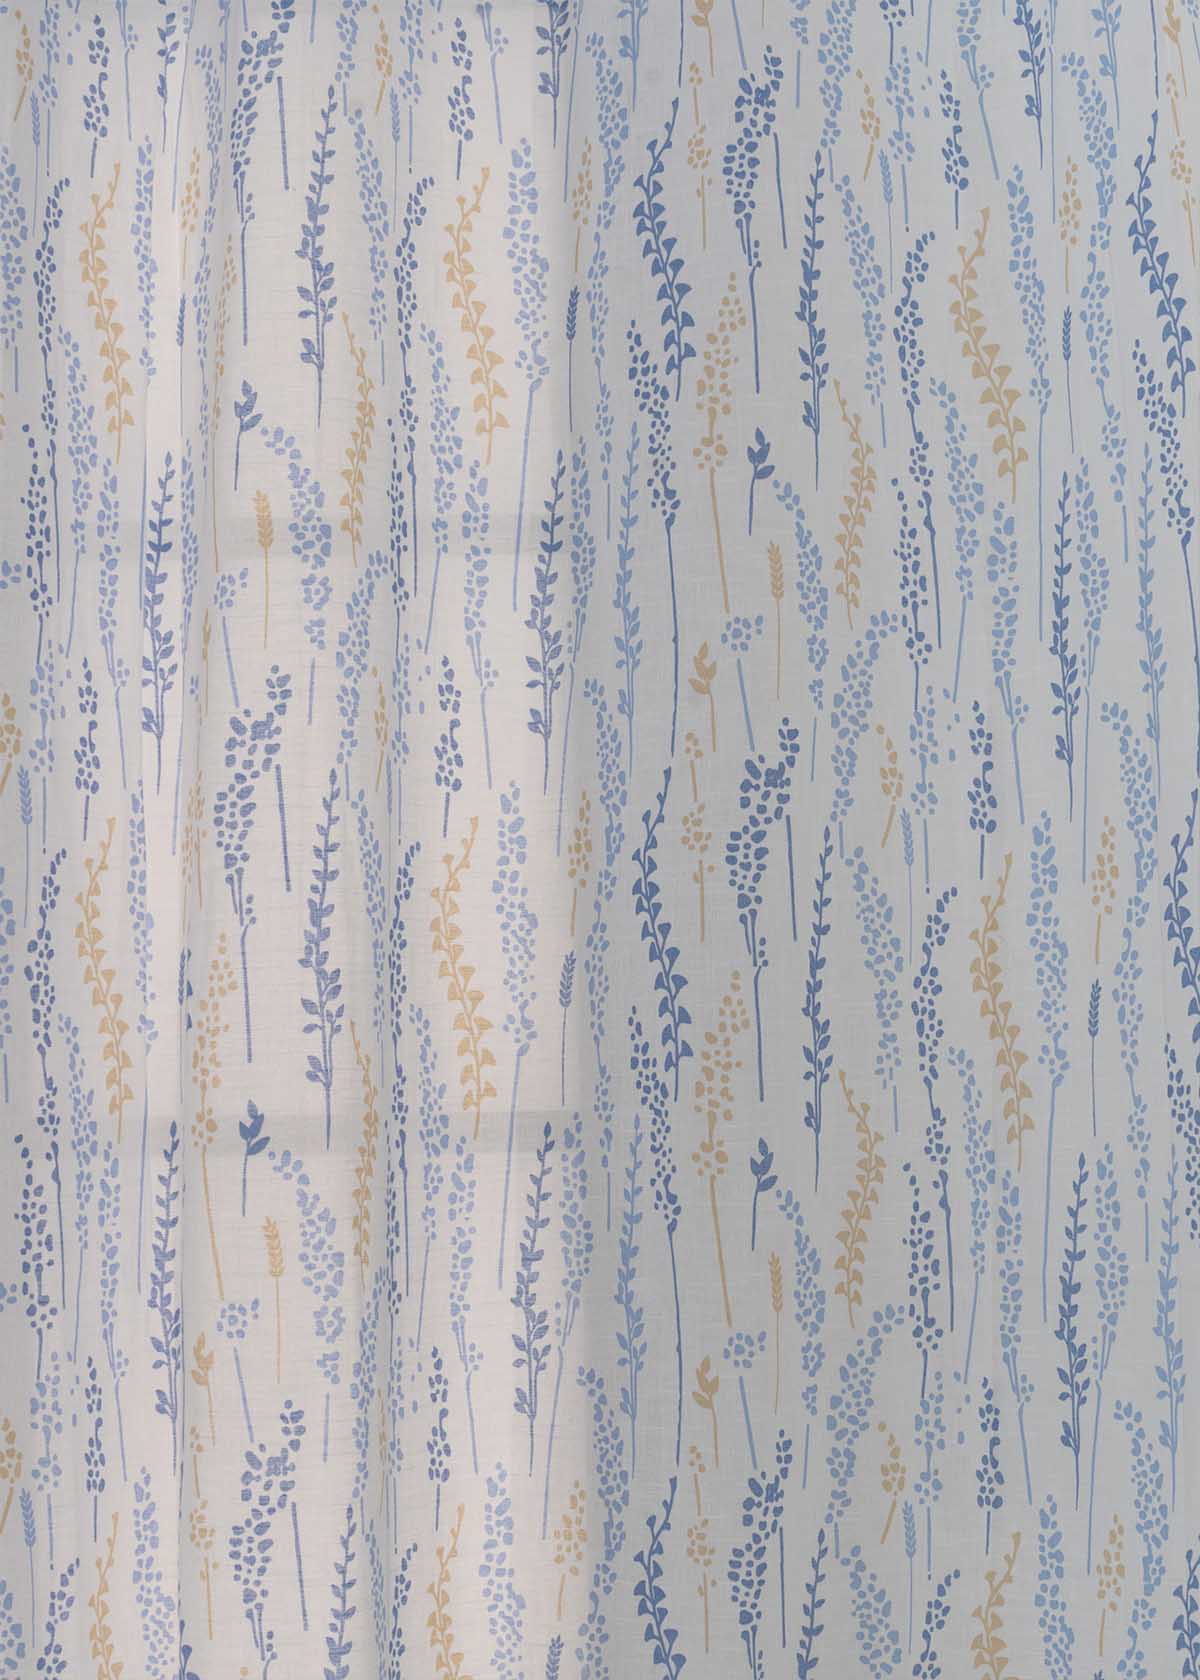 Grass Fields printed sheer Fabric - Blue